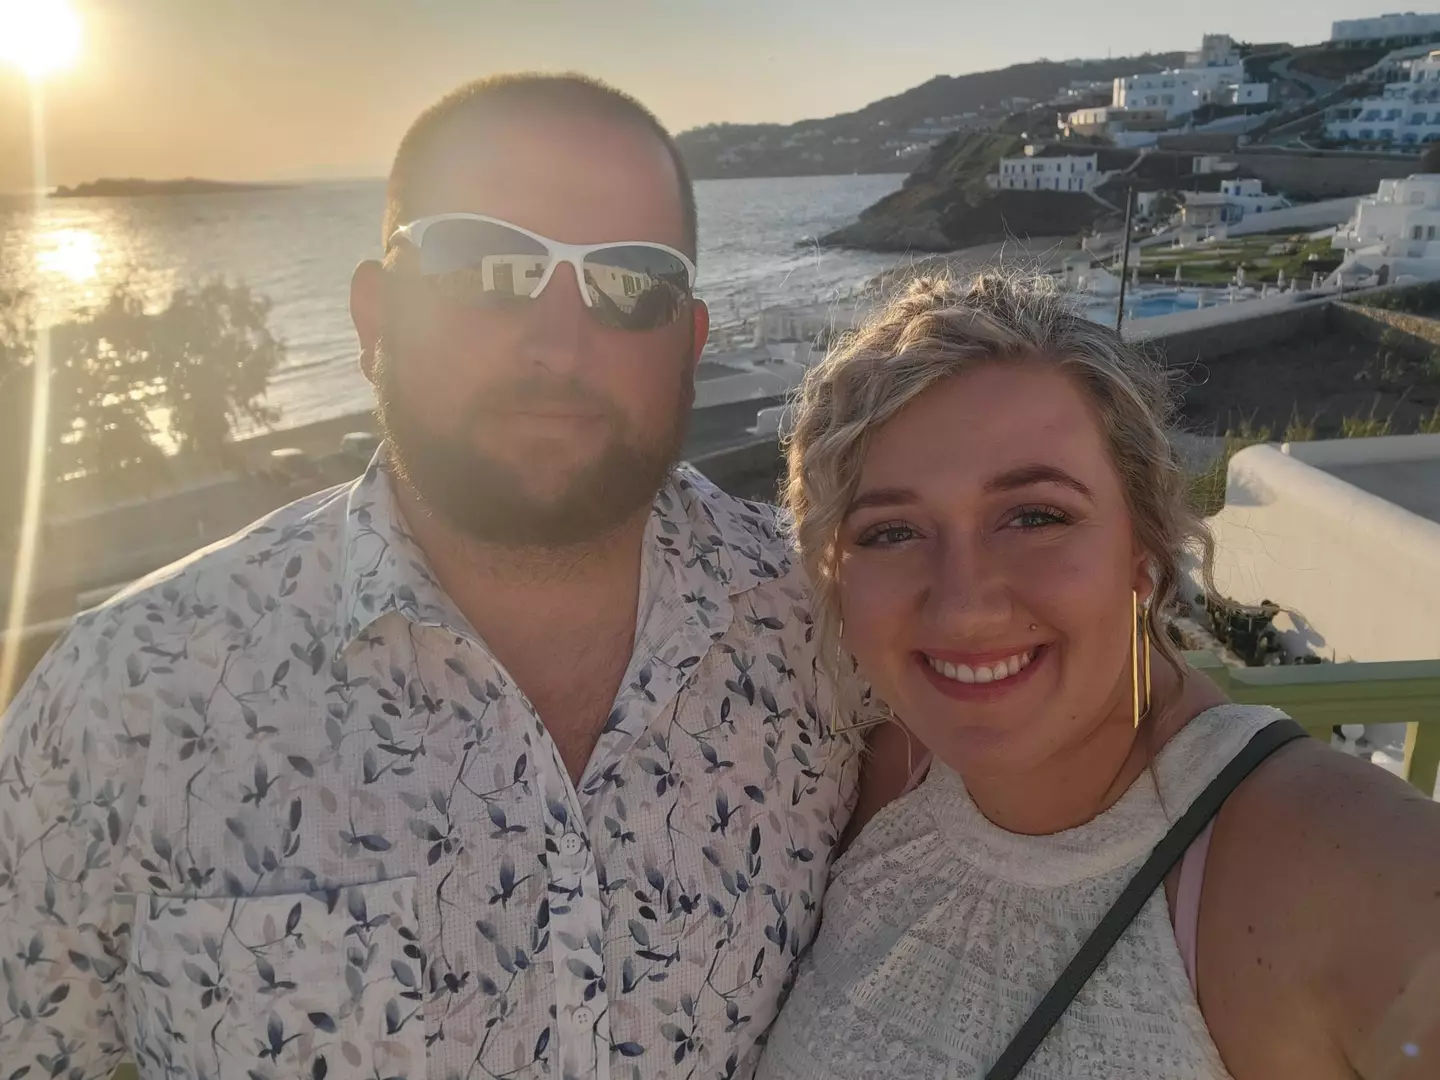 Jessica Yarnall and Adam Hagaun were on holiday in Greece.